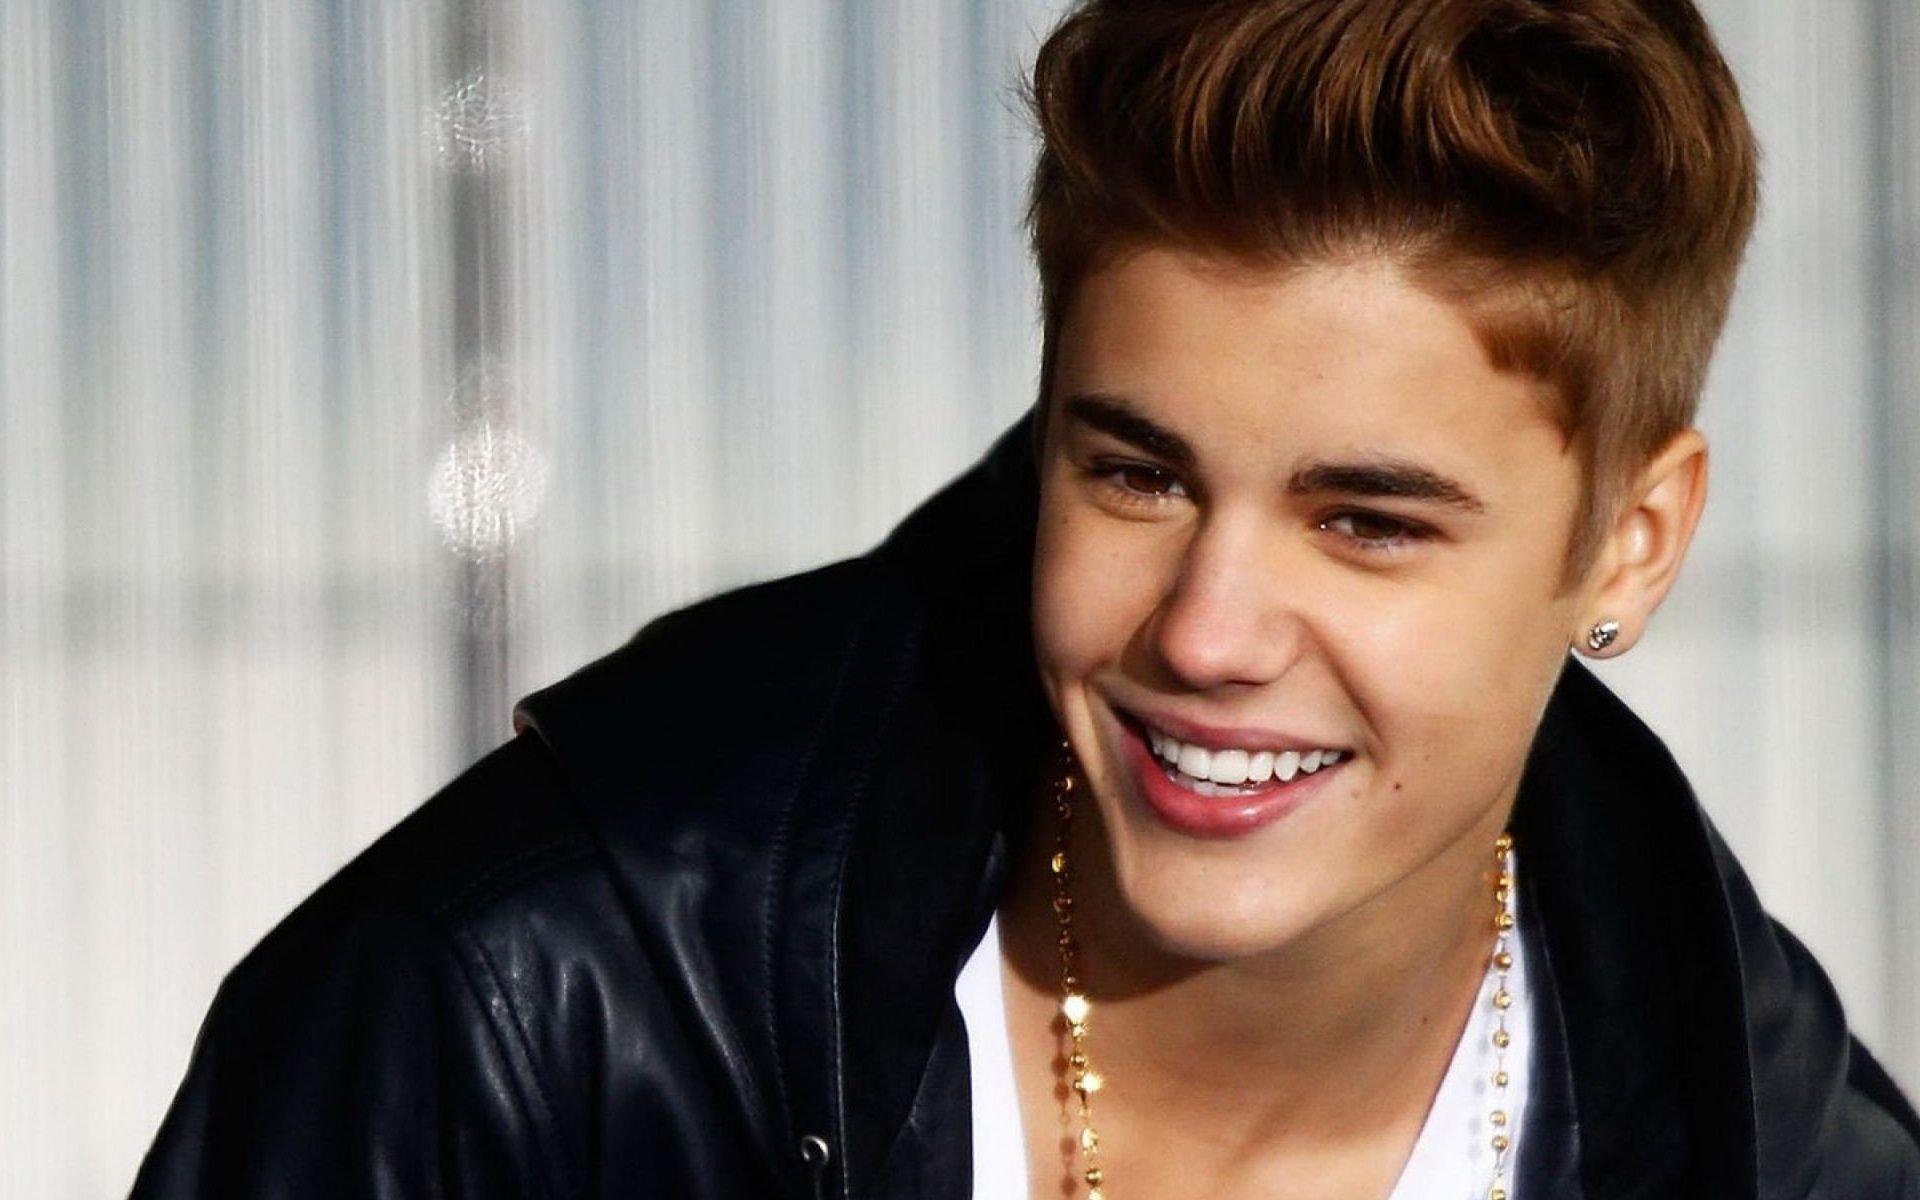 Justin Bieber Cute Smile HD Image Wallpaper